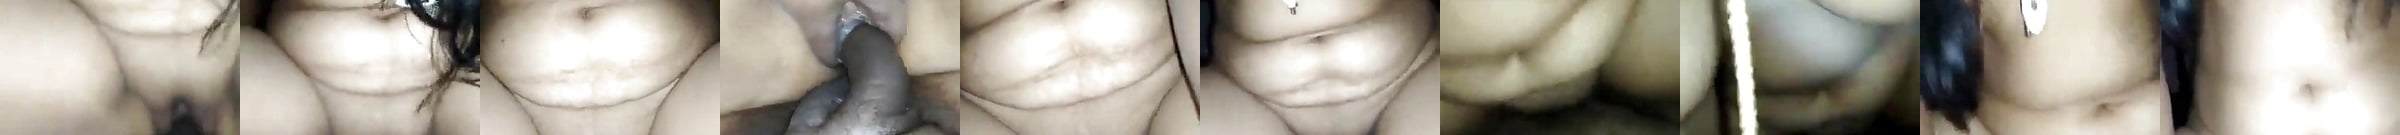 Unseen Porn Videos Xhamster